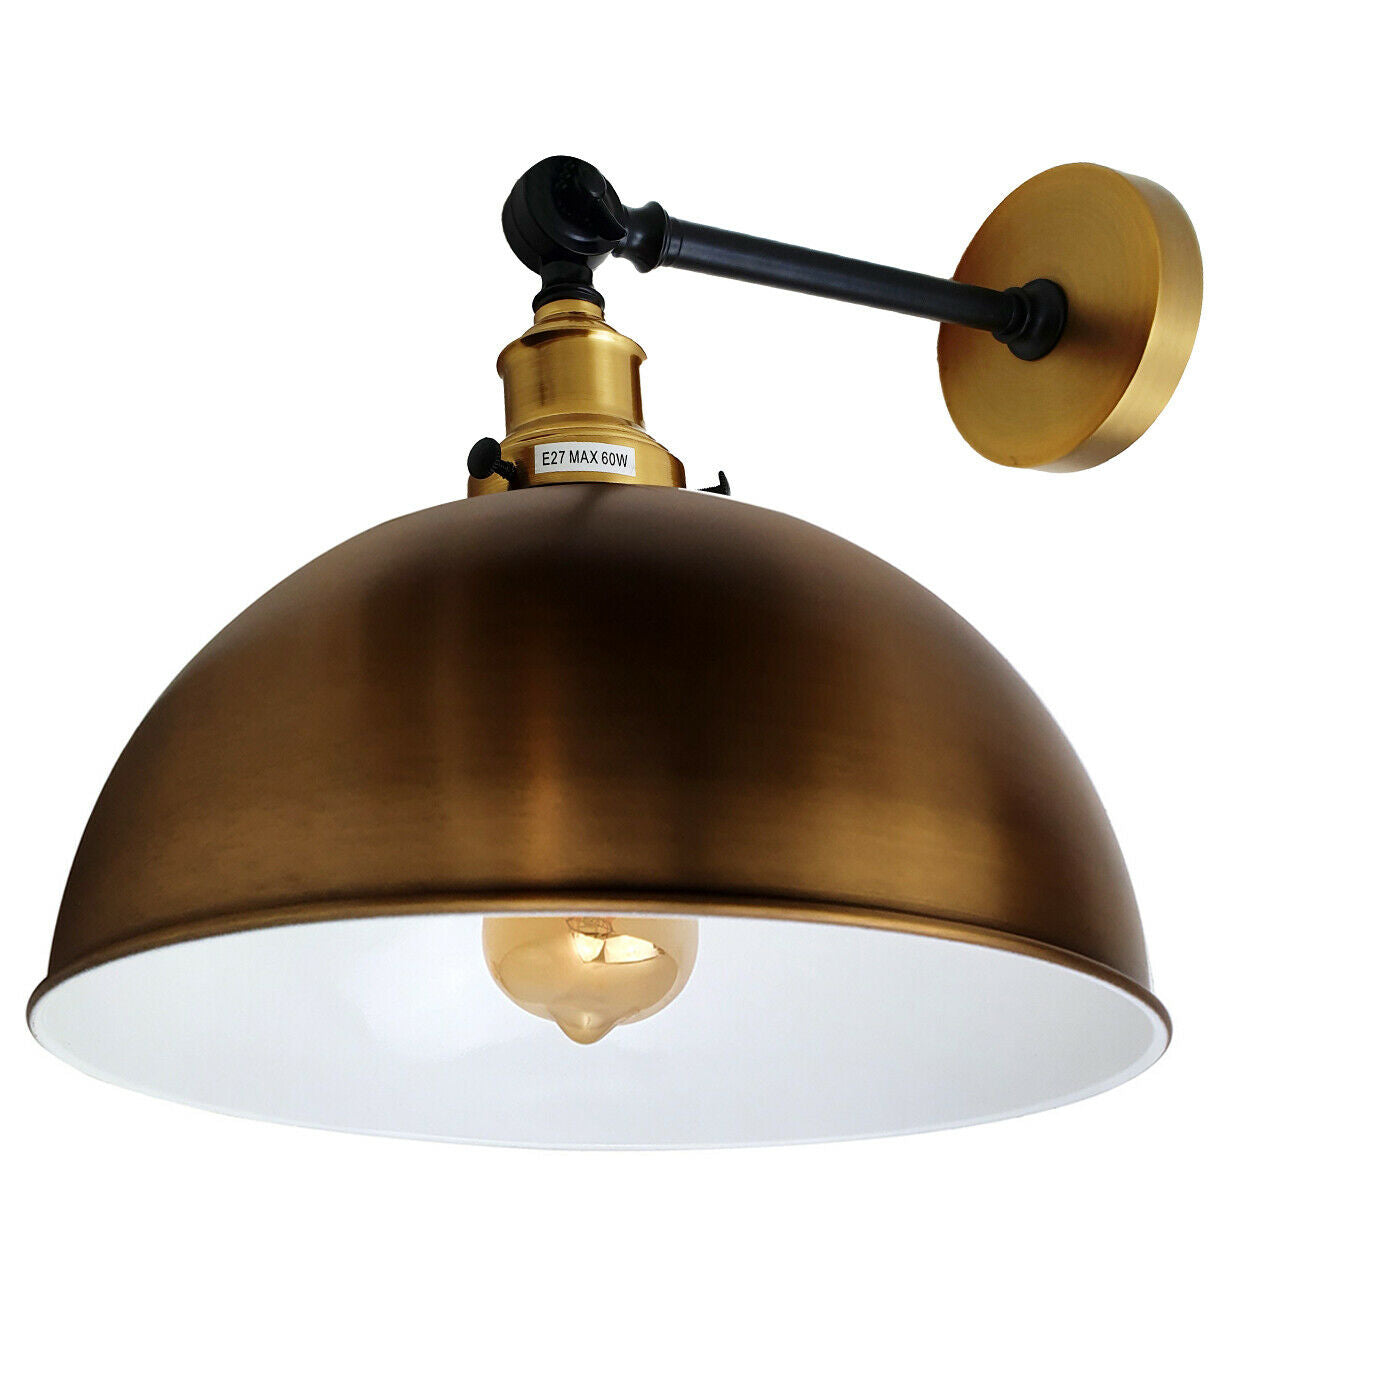 Vintage Style Adjustable Yellow Brass Wall Lights Sconce Lamp Fitting Kit~2474 - LEDSone UK Ltd